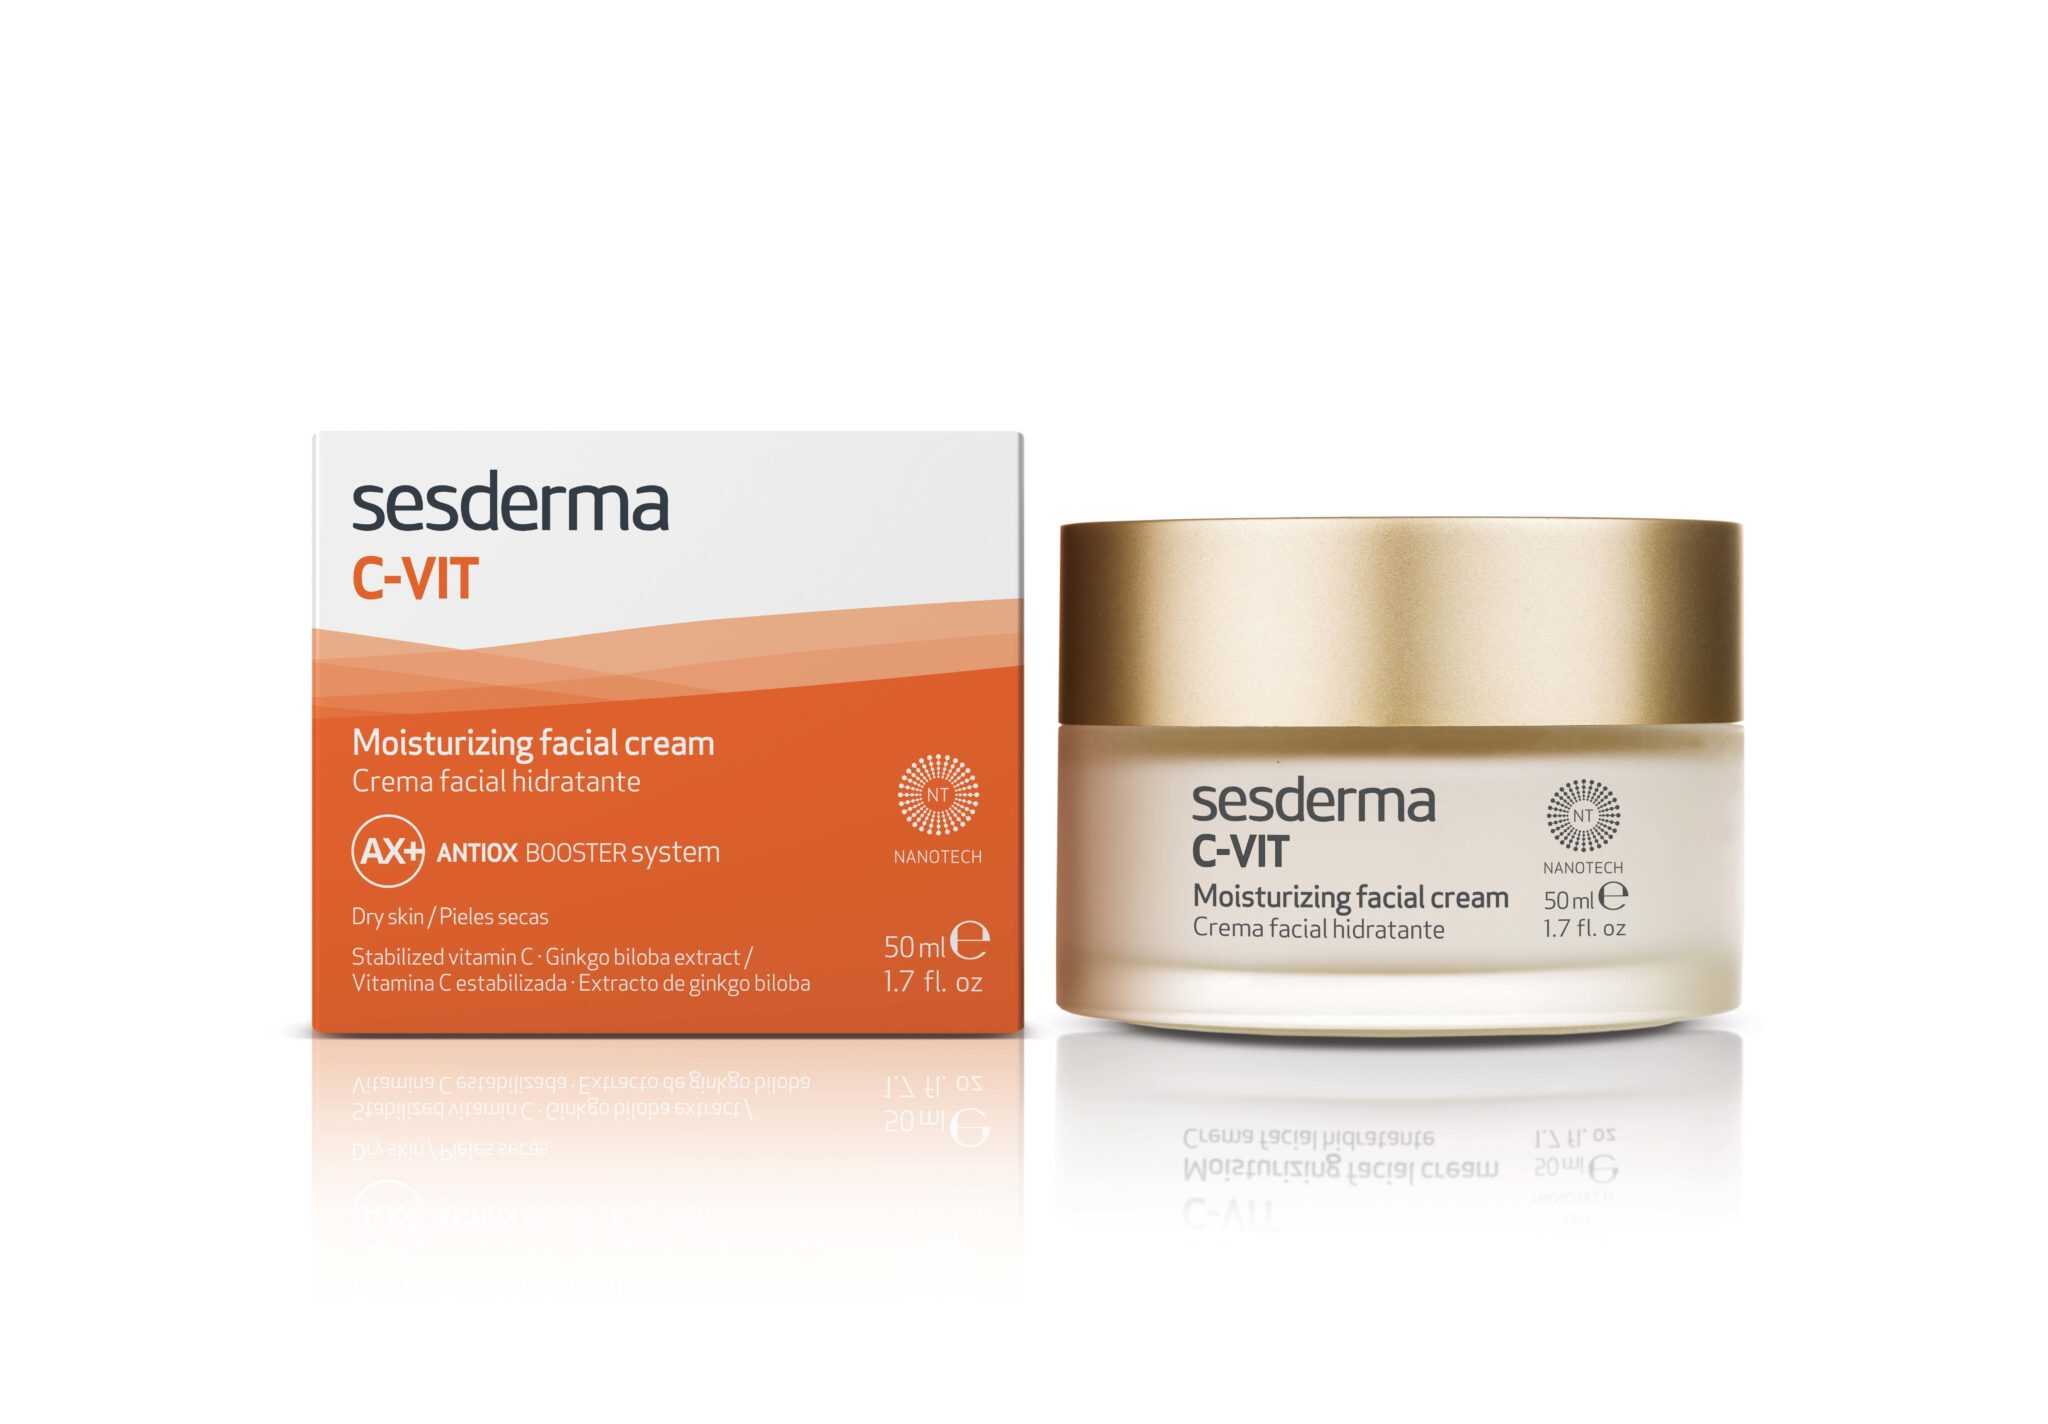 SESDERMA C-VIT AX+ Moisturizing Facial Cream